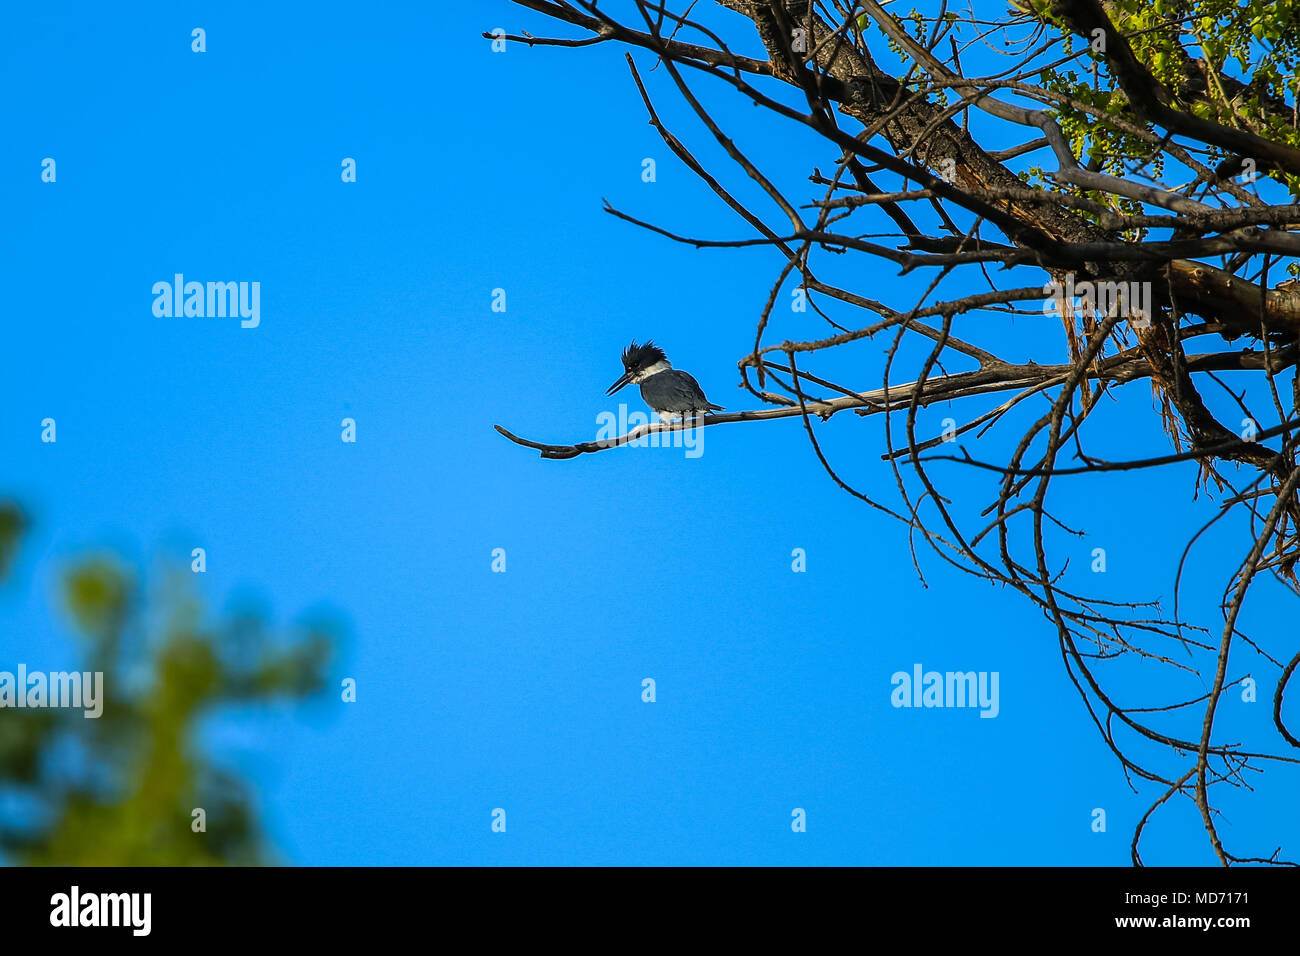 Martin Pescador, Kingfisher  .Cuenca del Rio San Pedro, Naturalia Stock Photo